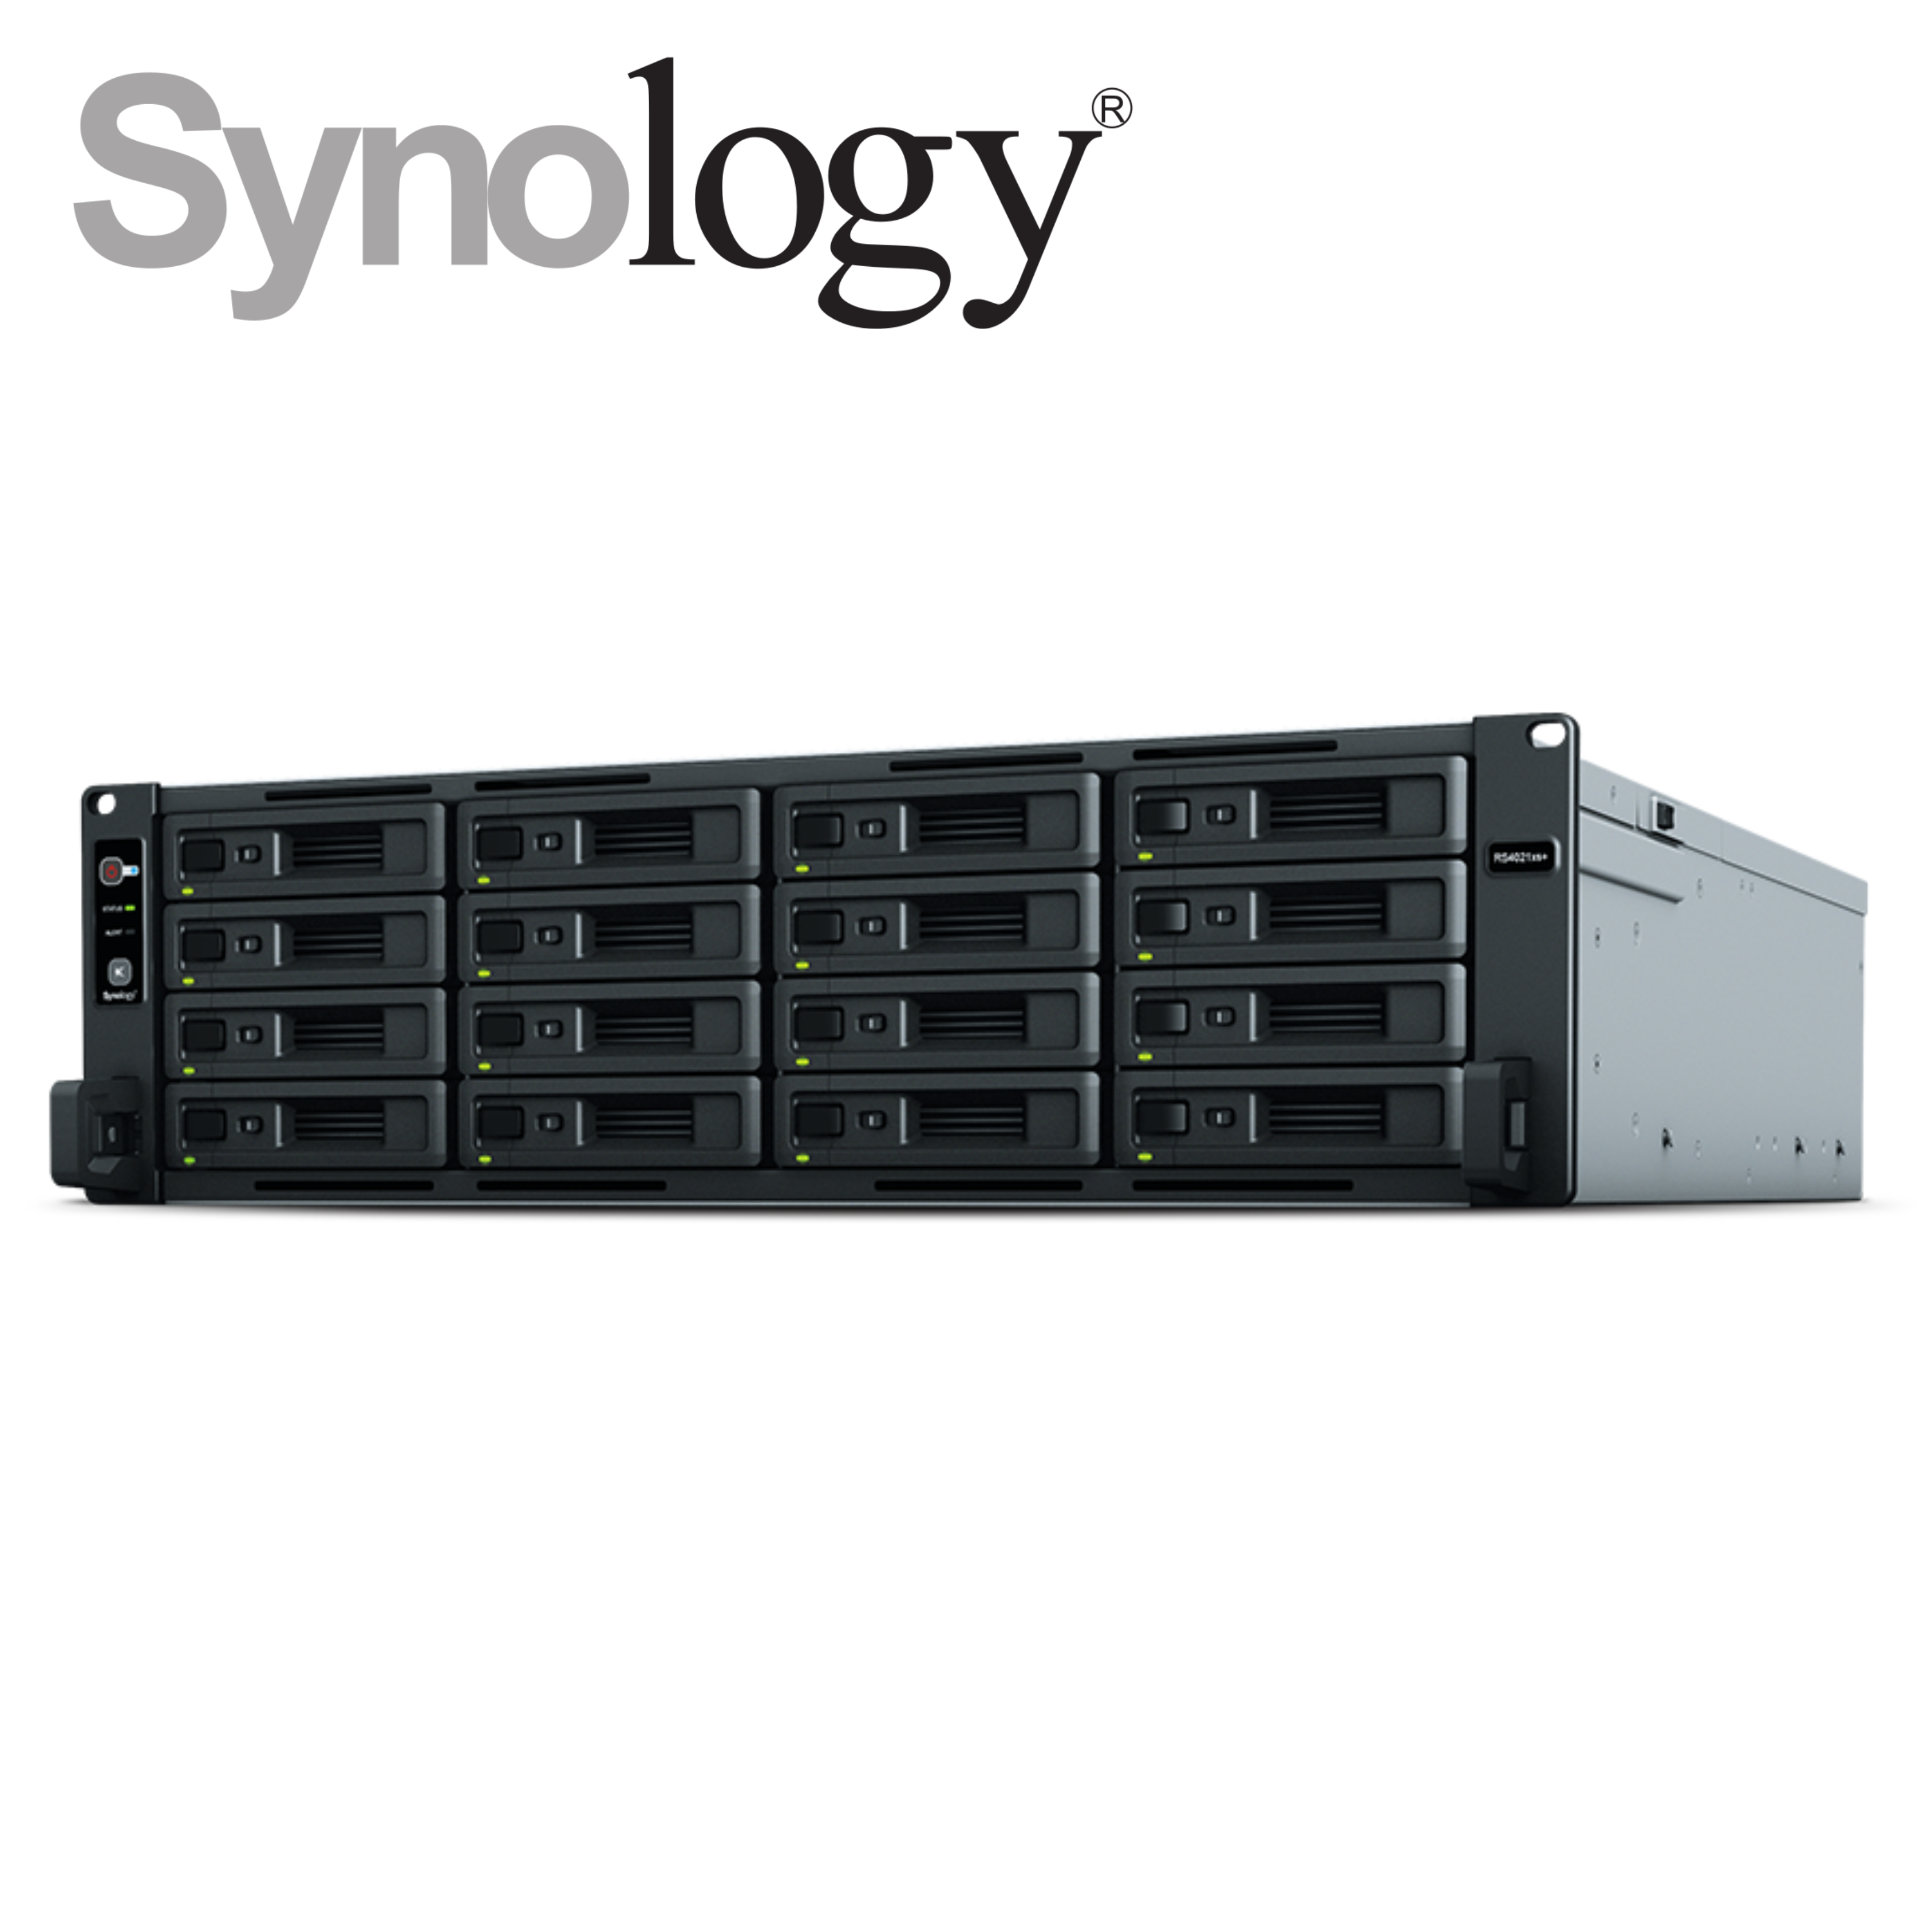 Synology RS4021xs+ RackStation